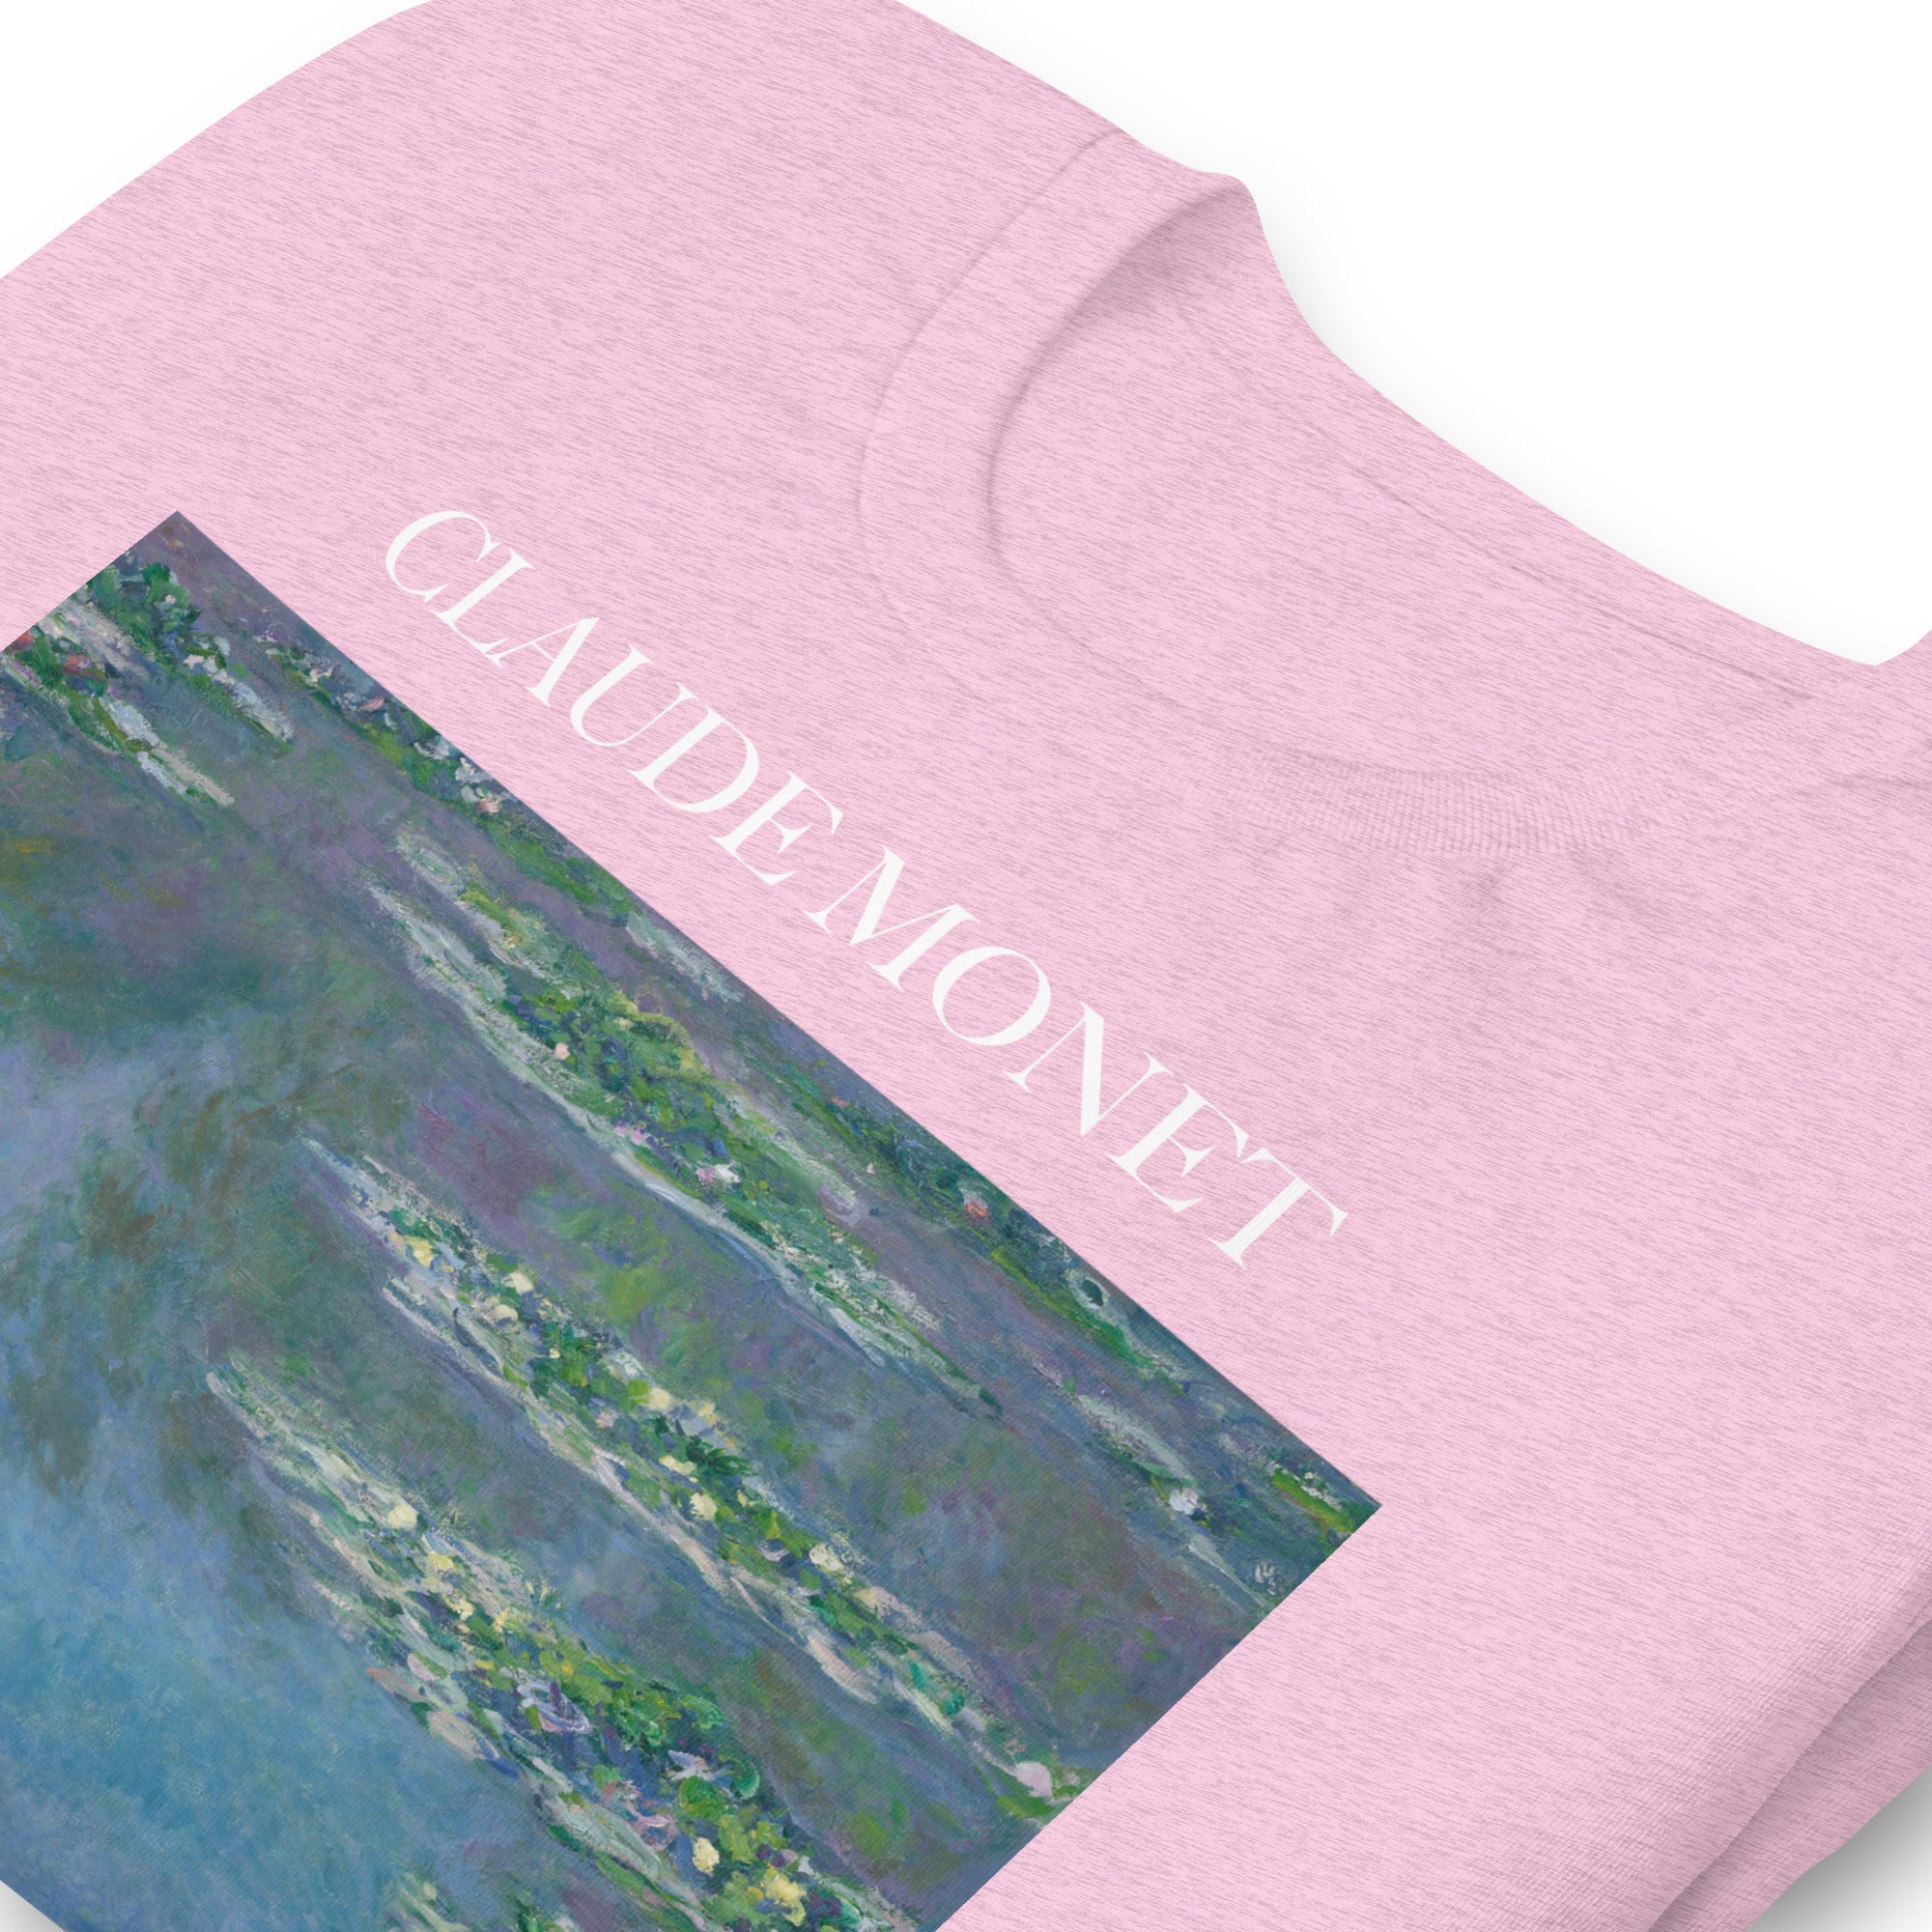 Claude Monet 'Water Lilies' Famous Painting T-Shirt | Unisex Classic Art Tee